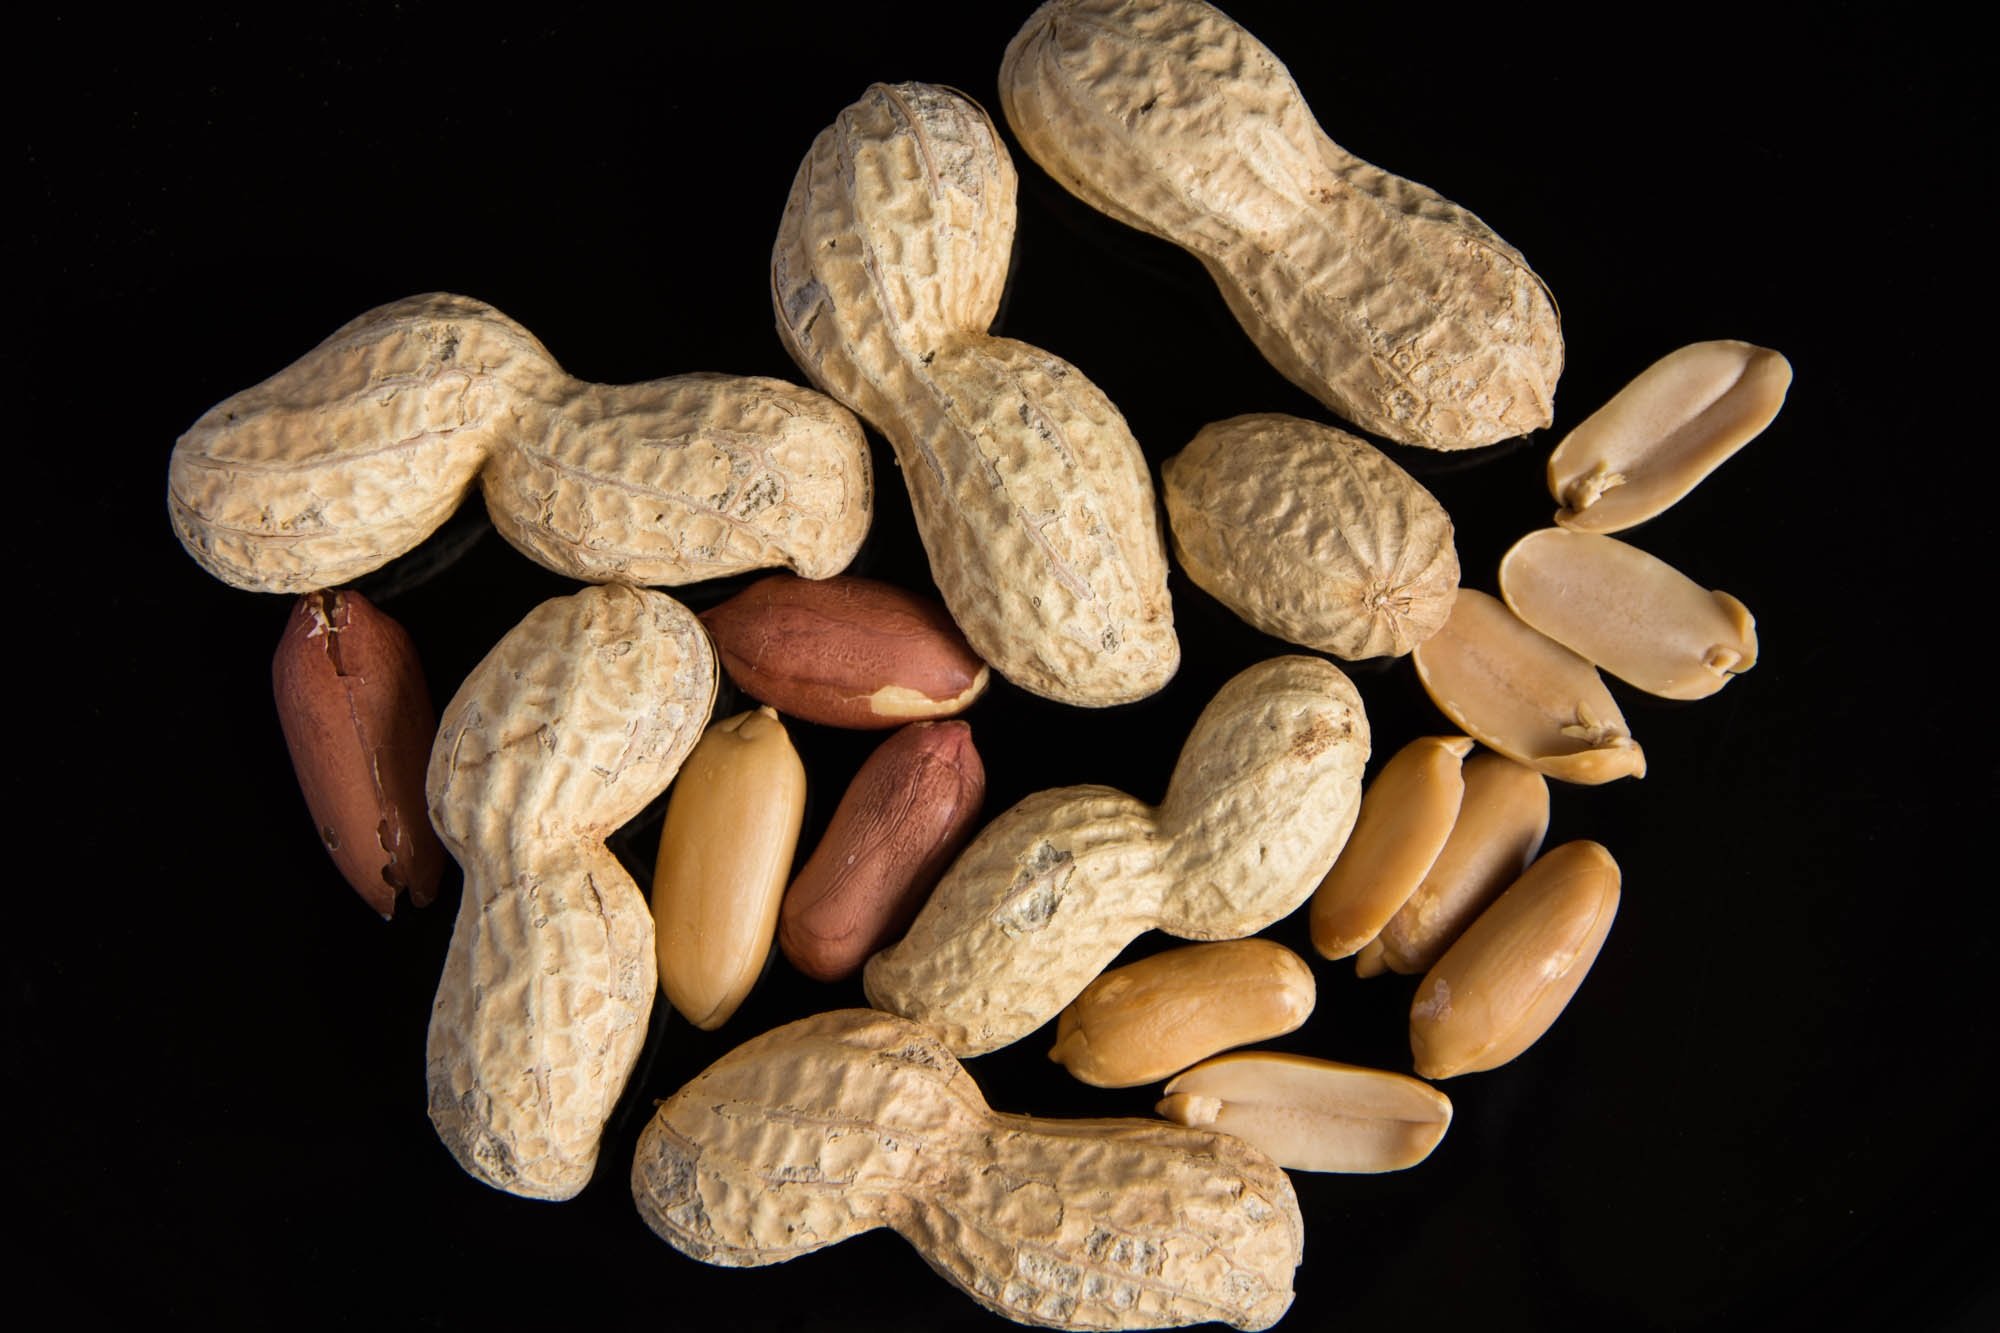 Земляной арахис. Земляной орех арахис. Арахис Peanuts. Арахис культурный Земляной орех.